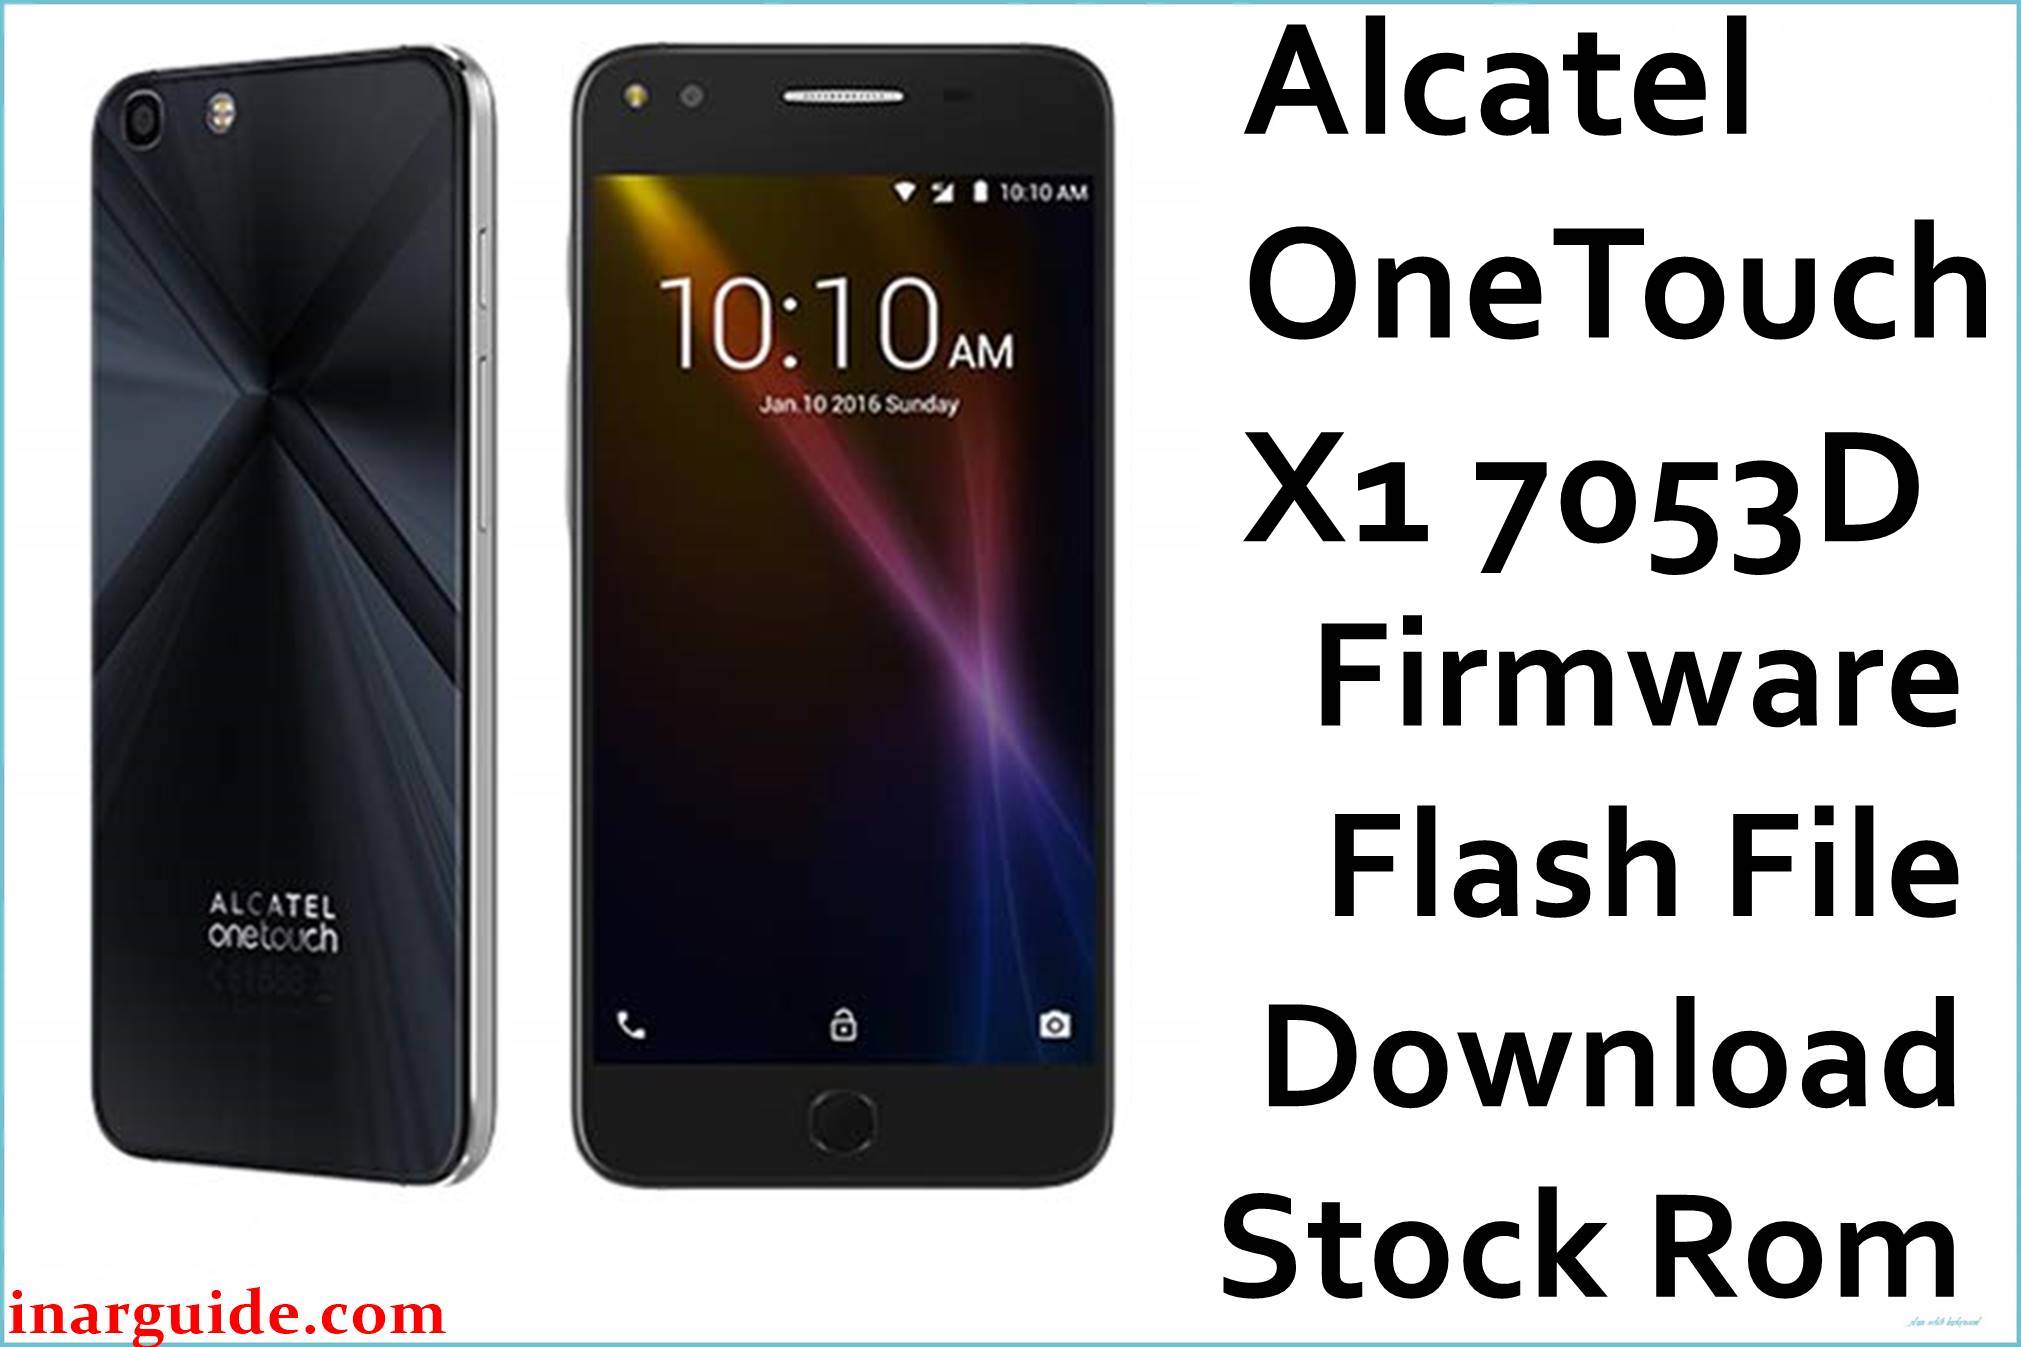 Alcatel OneTouch X1 7053D